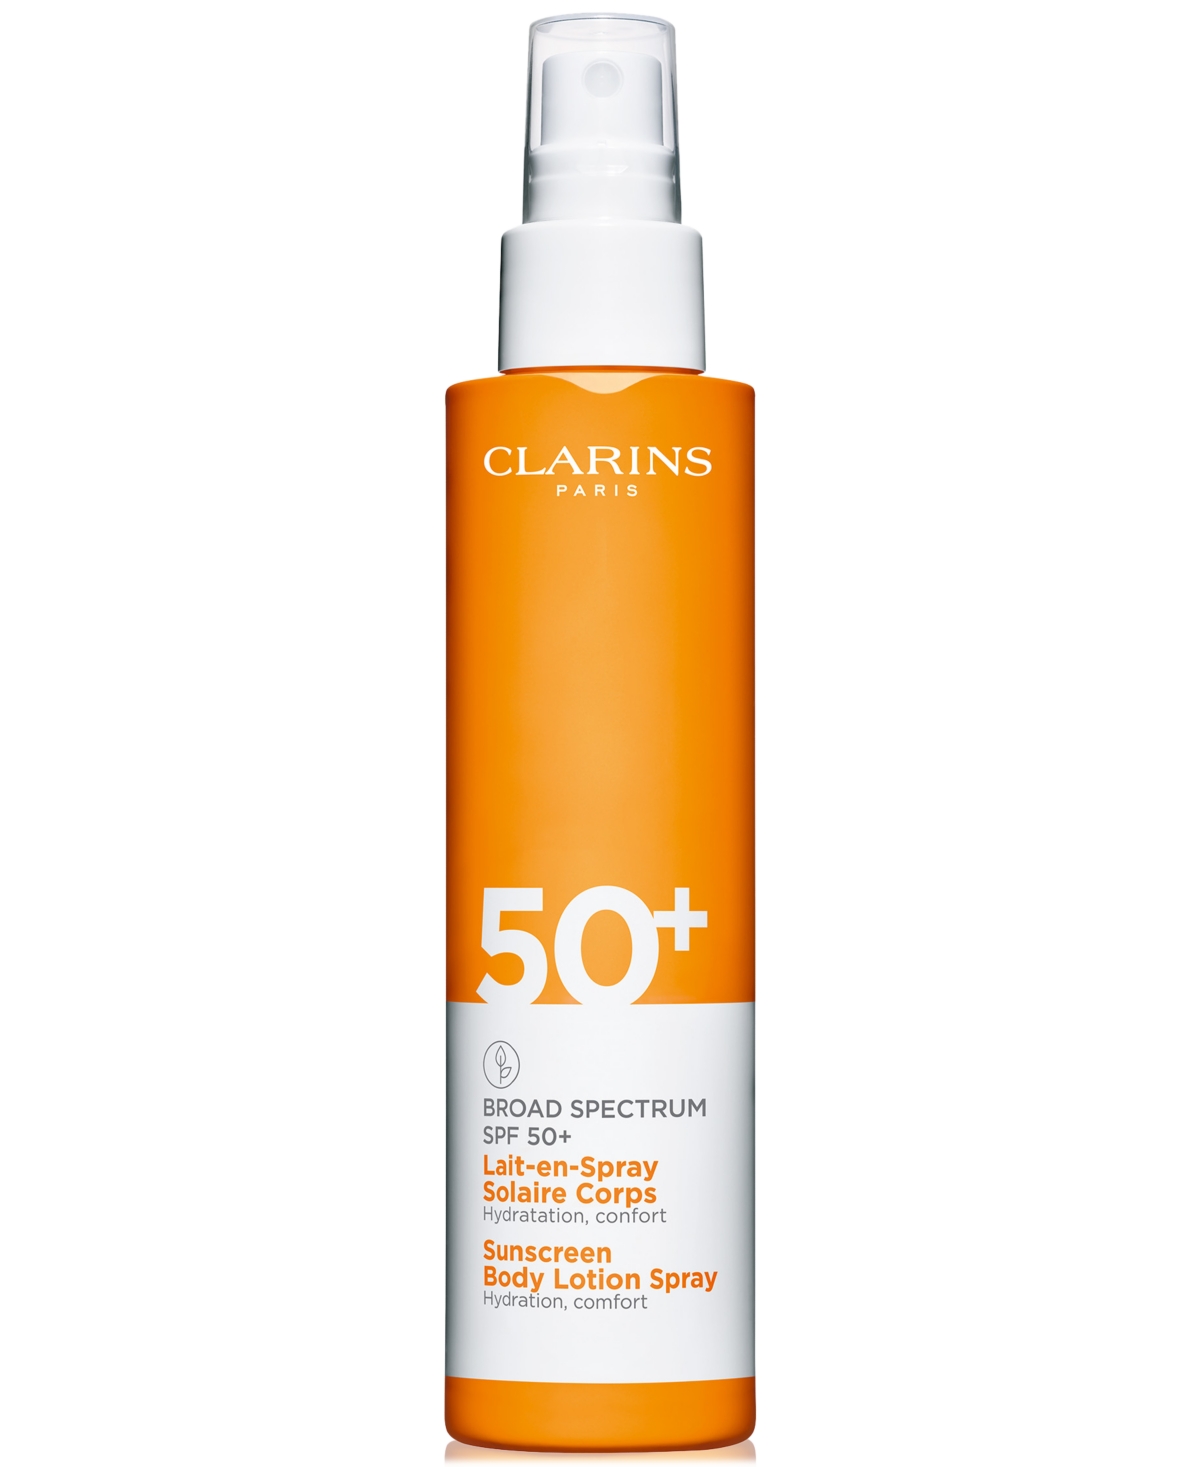 Sunscreen Body Lotion Spray Broad Spectrum Spf 50+, 5 oz.